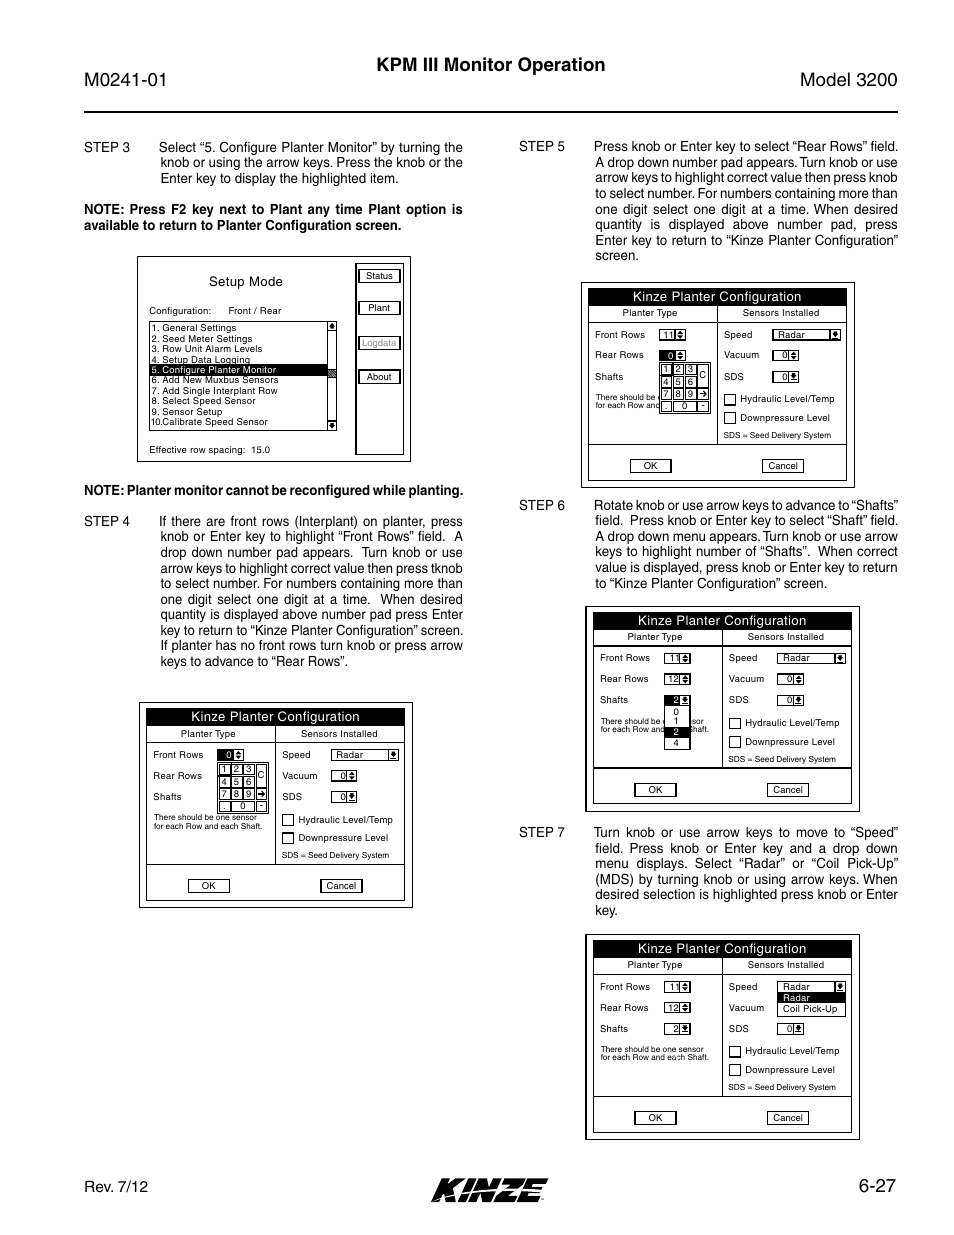 27 kpm iii monitor operation, Rev. 7/12 | Kinze 3200 Wing-Fold Planter Rev. 7/14 User Manual | Page 117 / 192